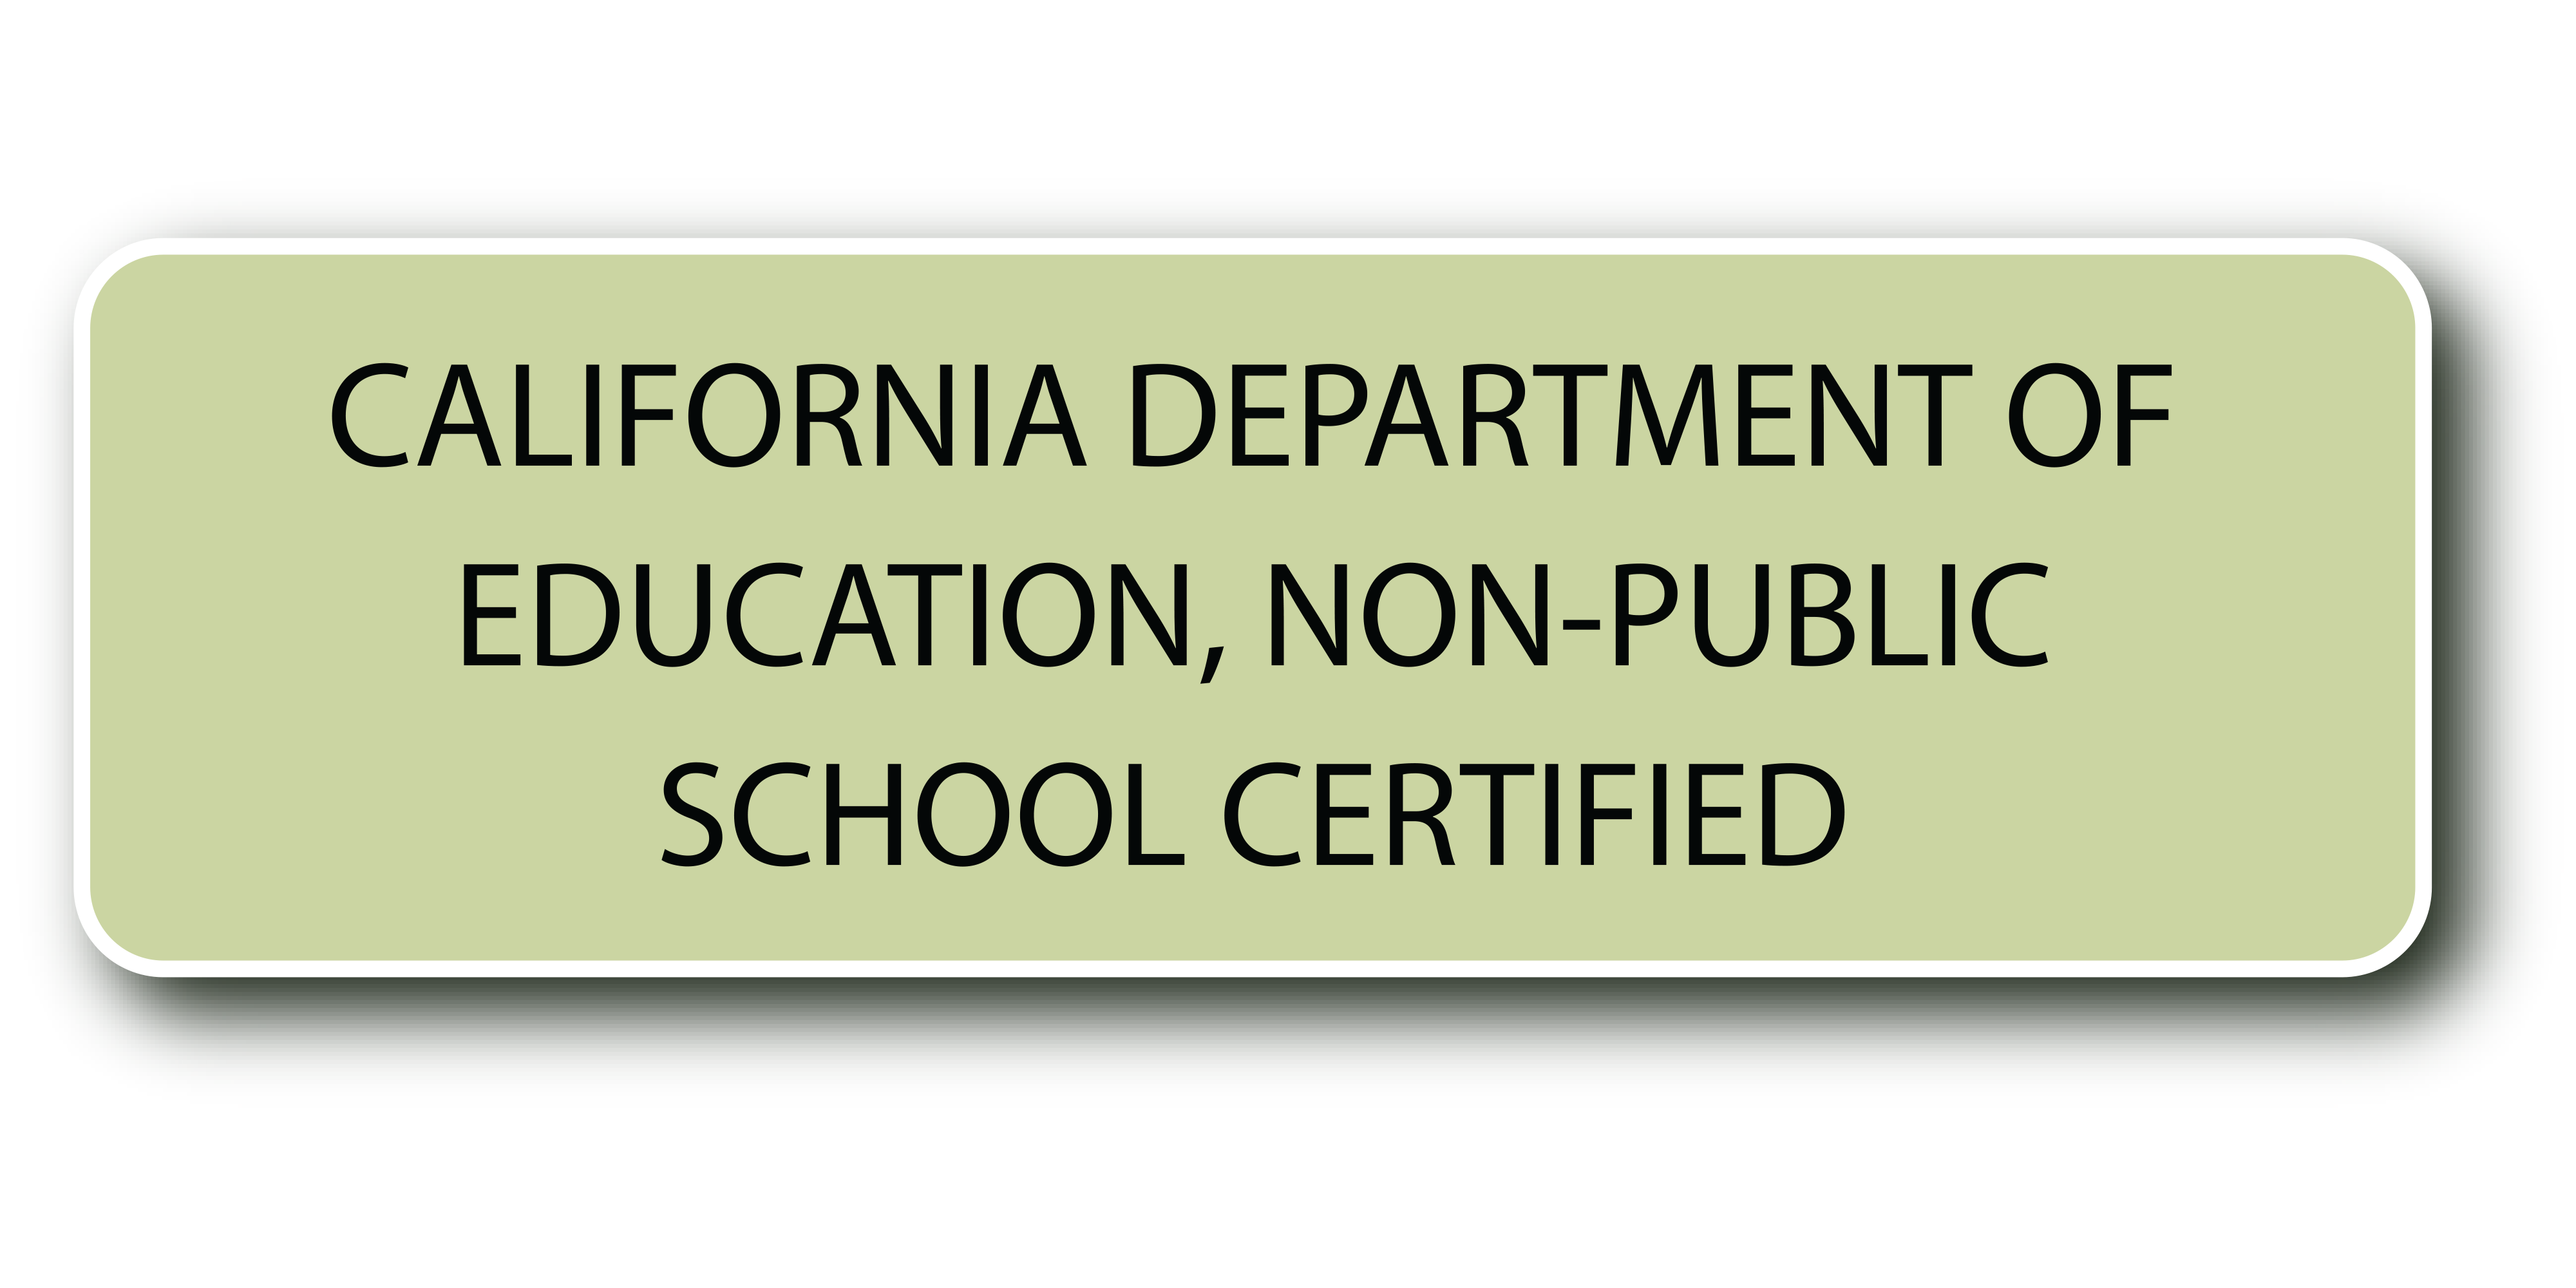 California Department of Education